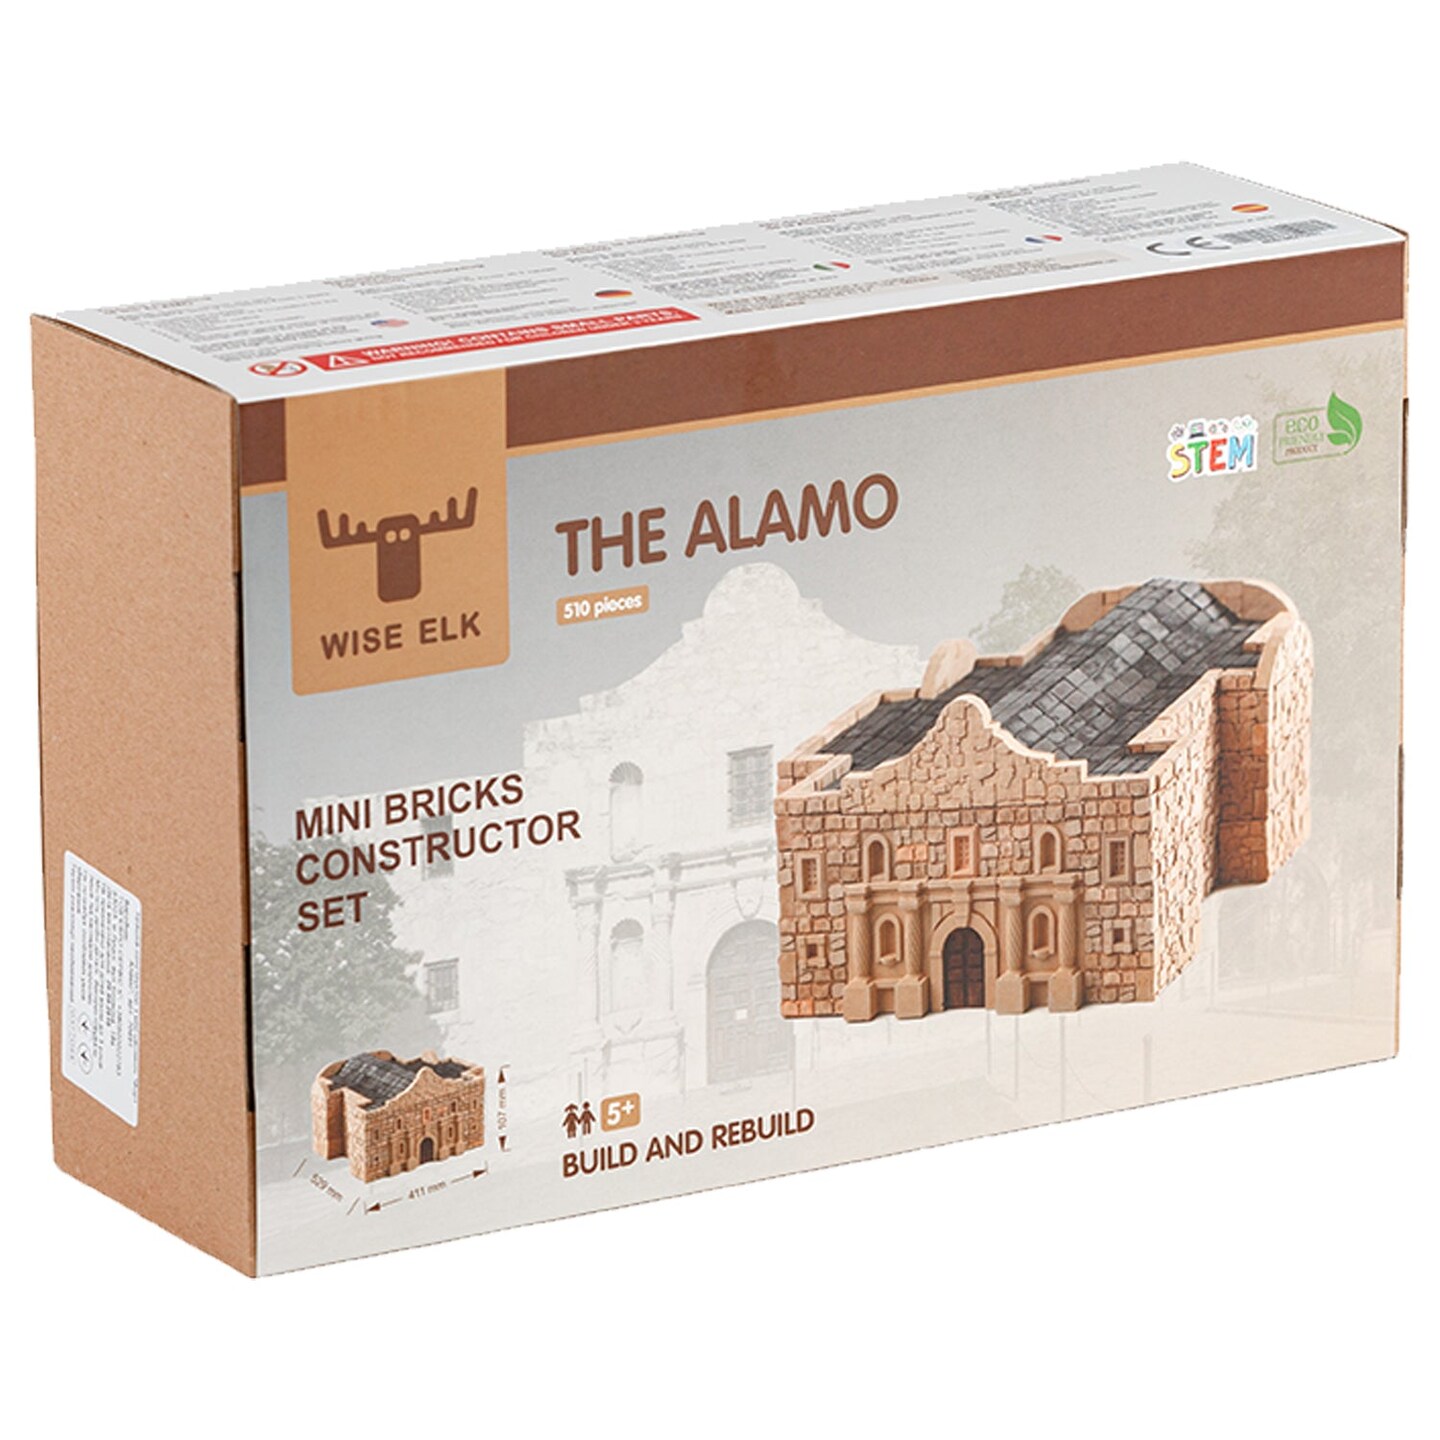 Mini Bricks Construction Set - Alamo